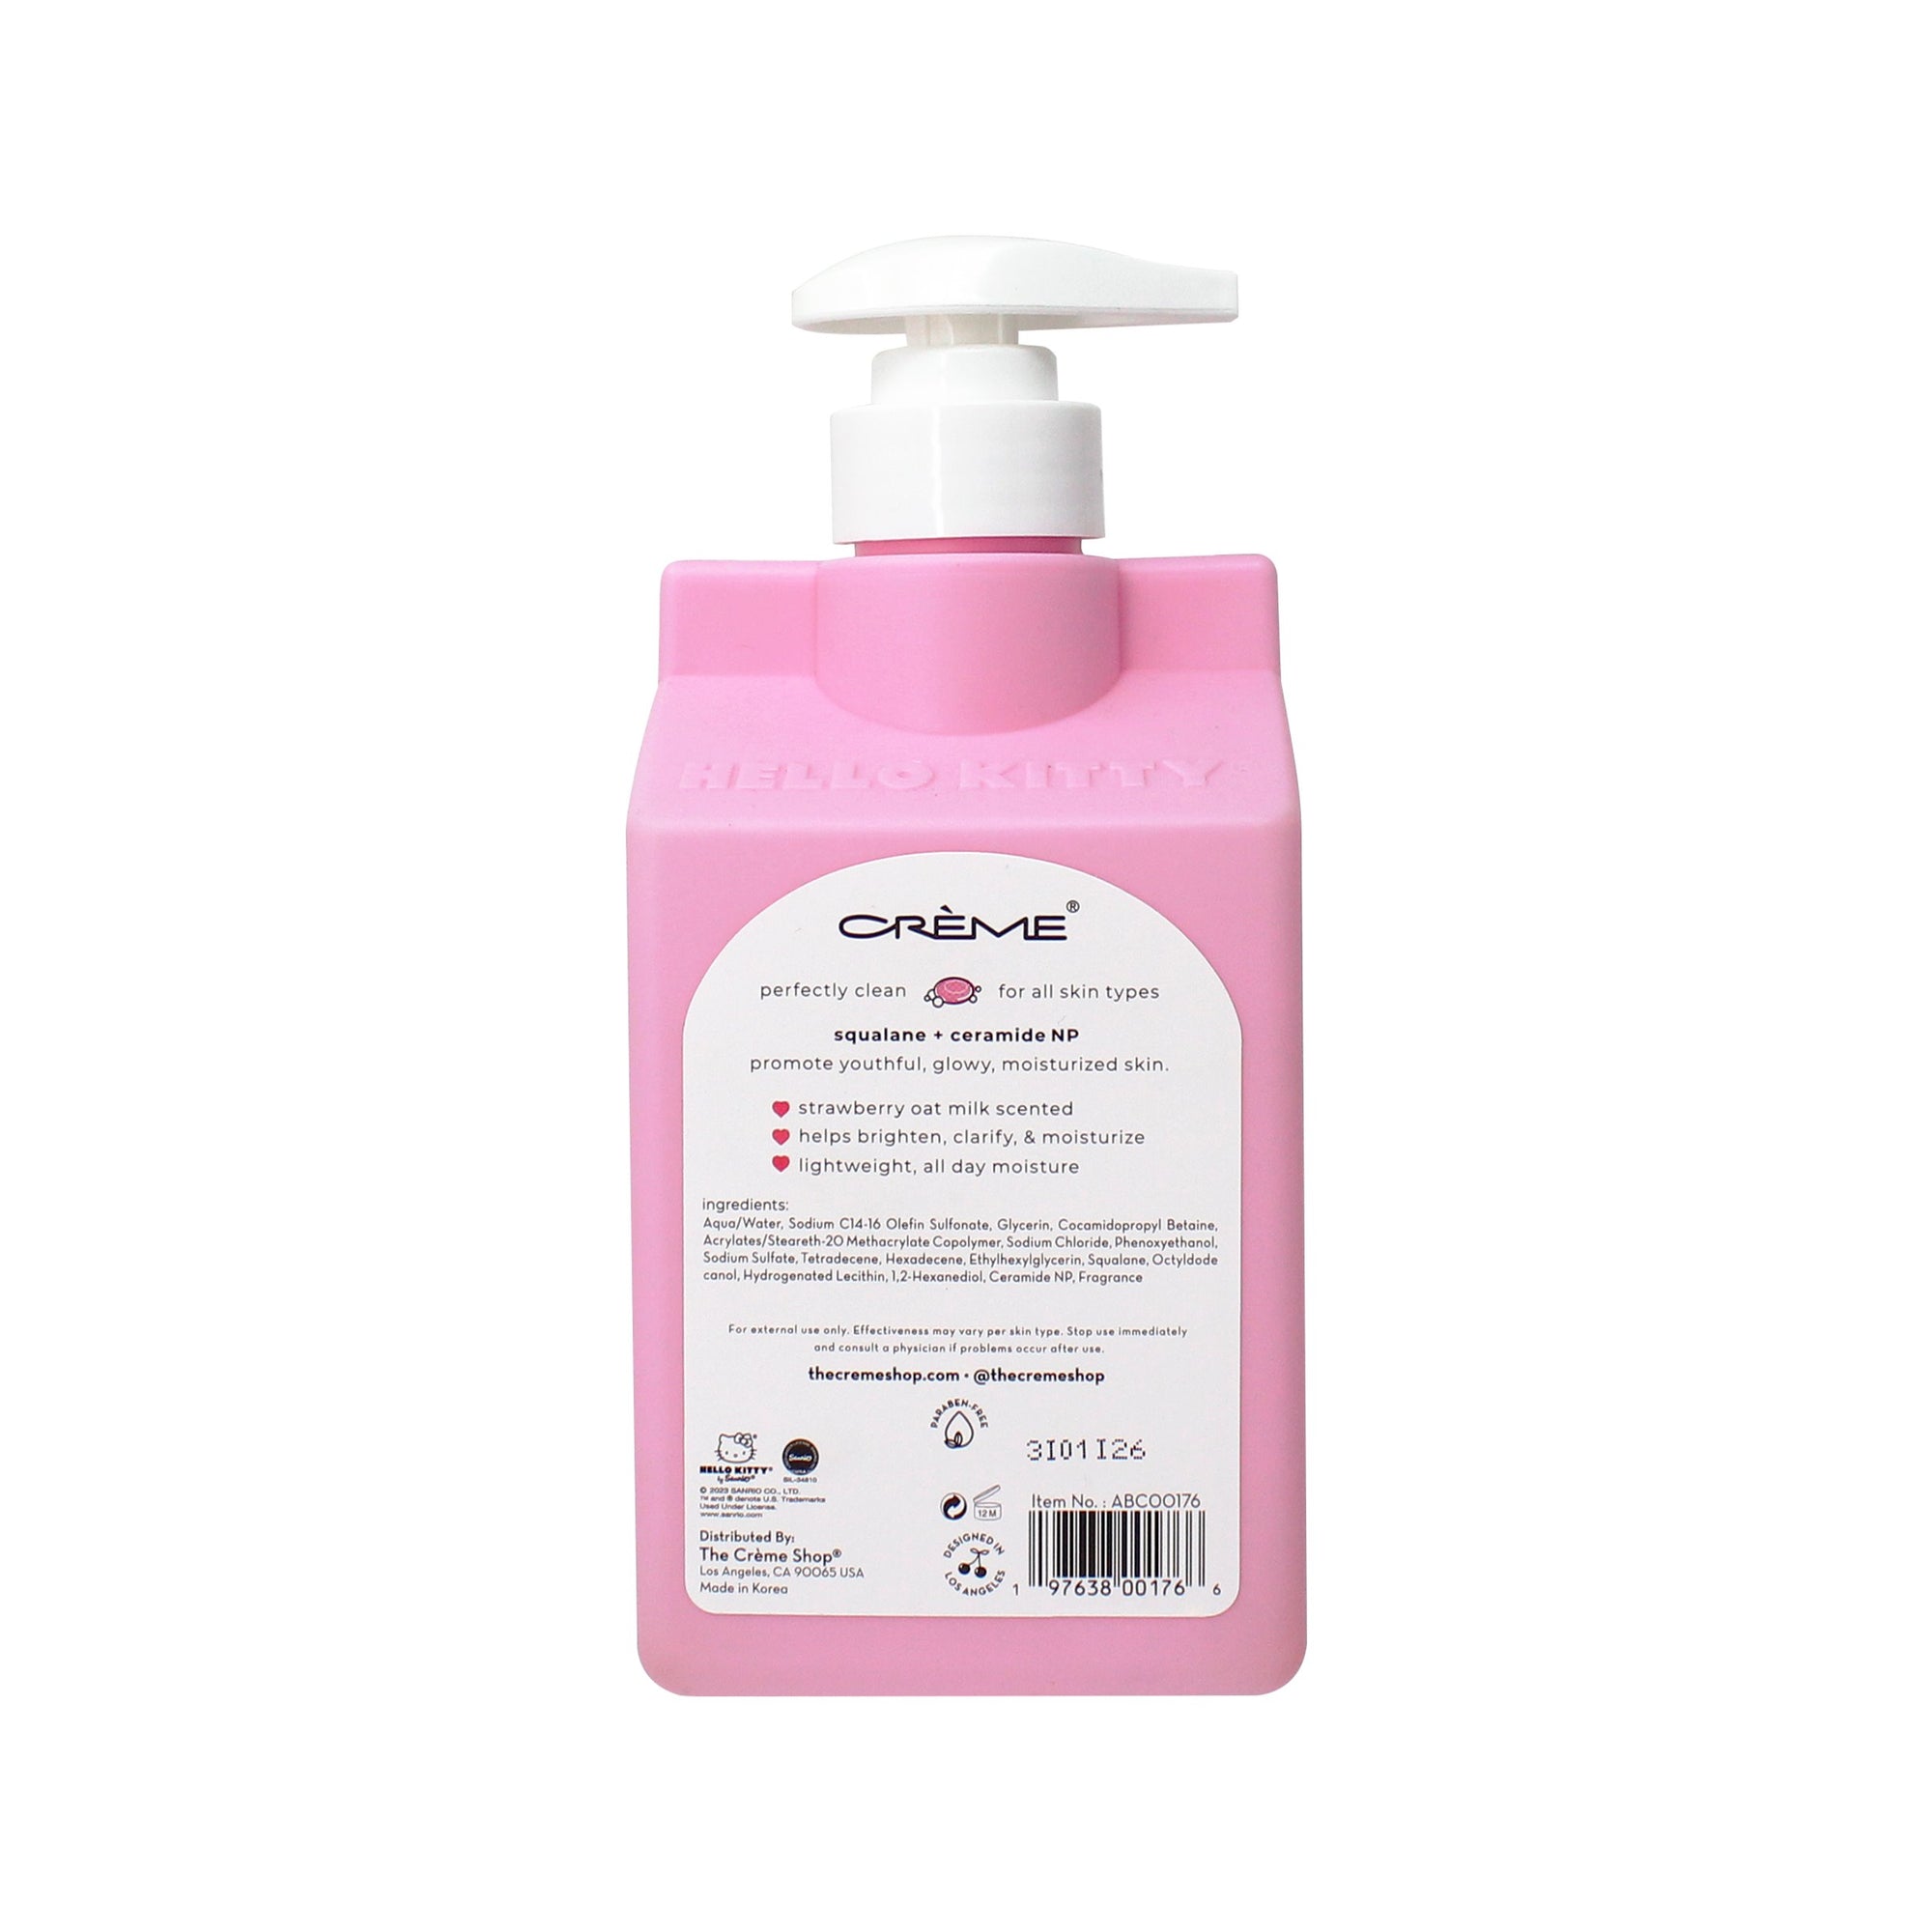 Hello Kitty Advanced Cleanse Body Cleanser - Strawberry Oat Milk Body Scrub The Crème Shop x Sanrio 